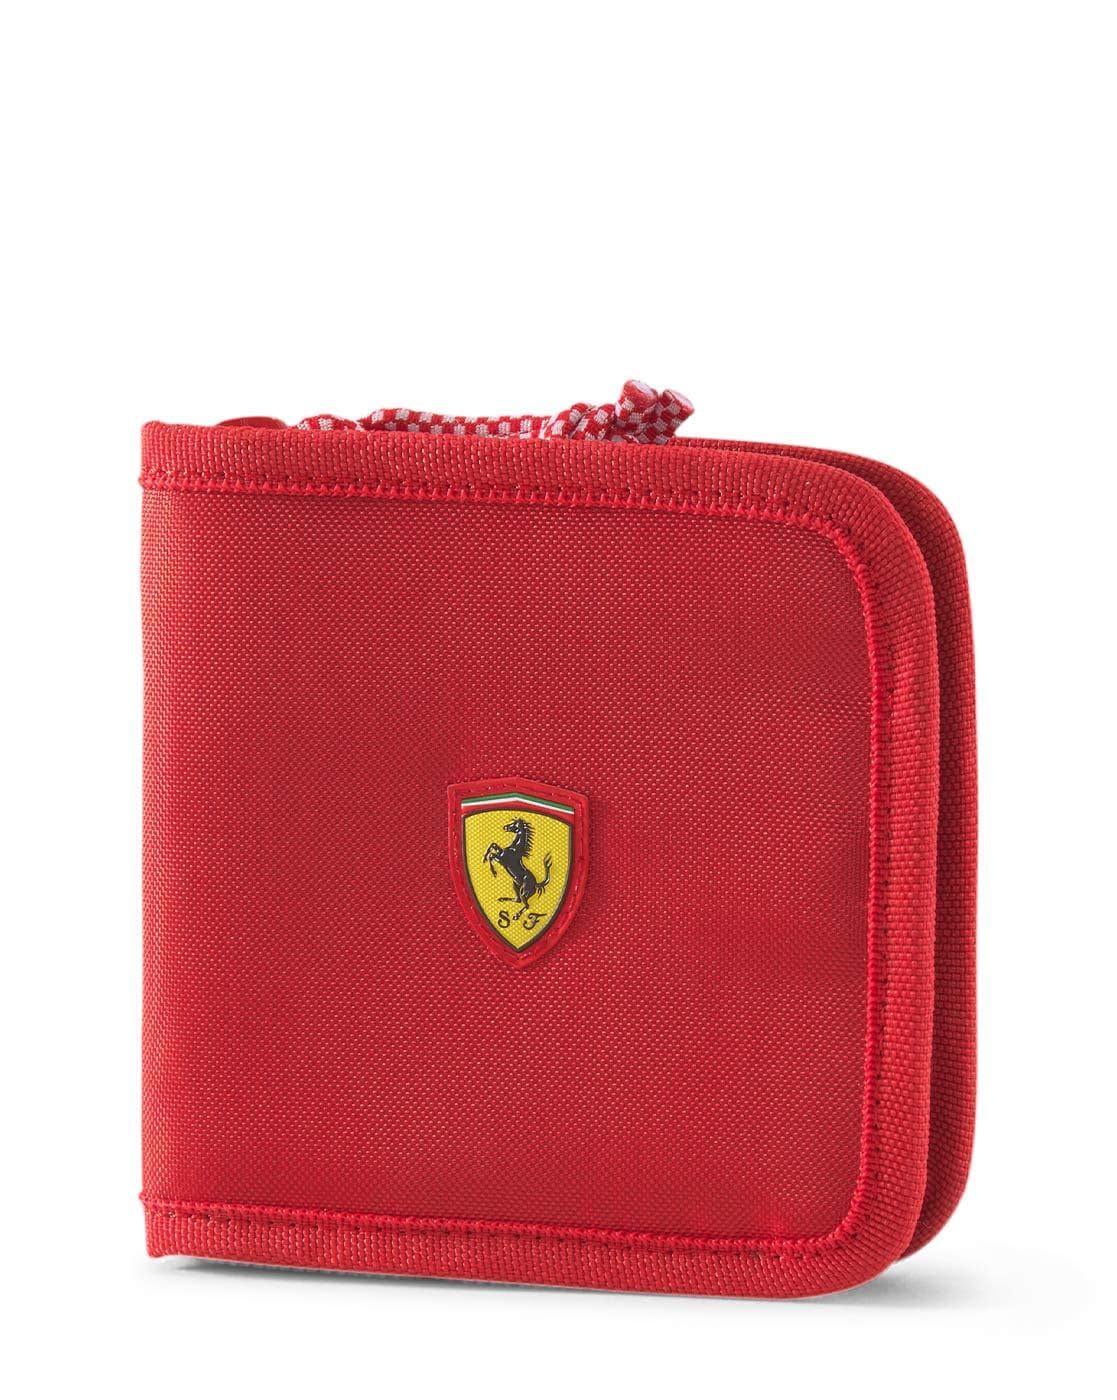 Puma Ferrari Wallet, Unisex Corsa (Rojo), Única Moda | lagear.com.ar